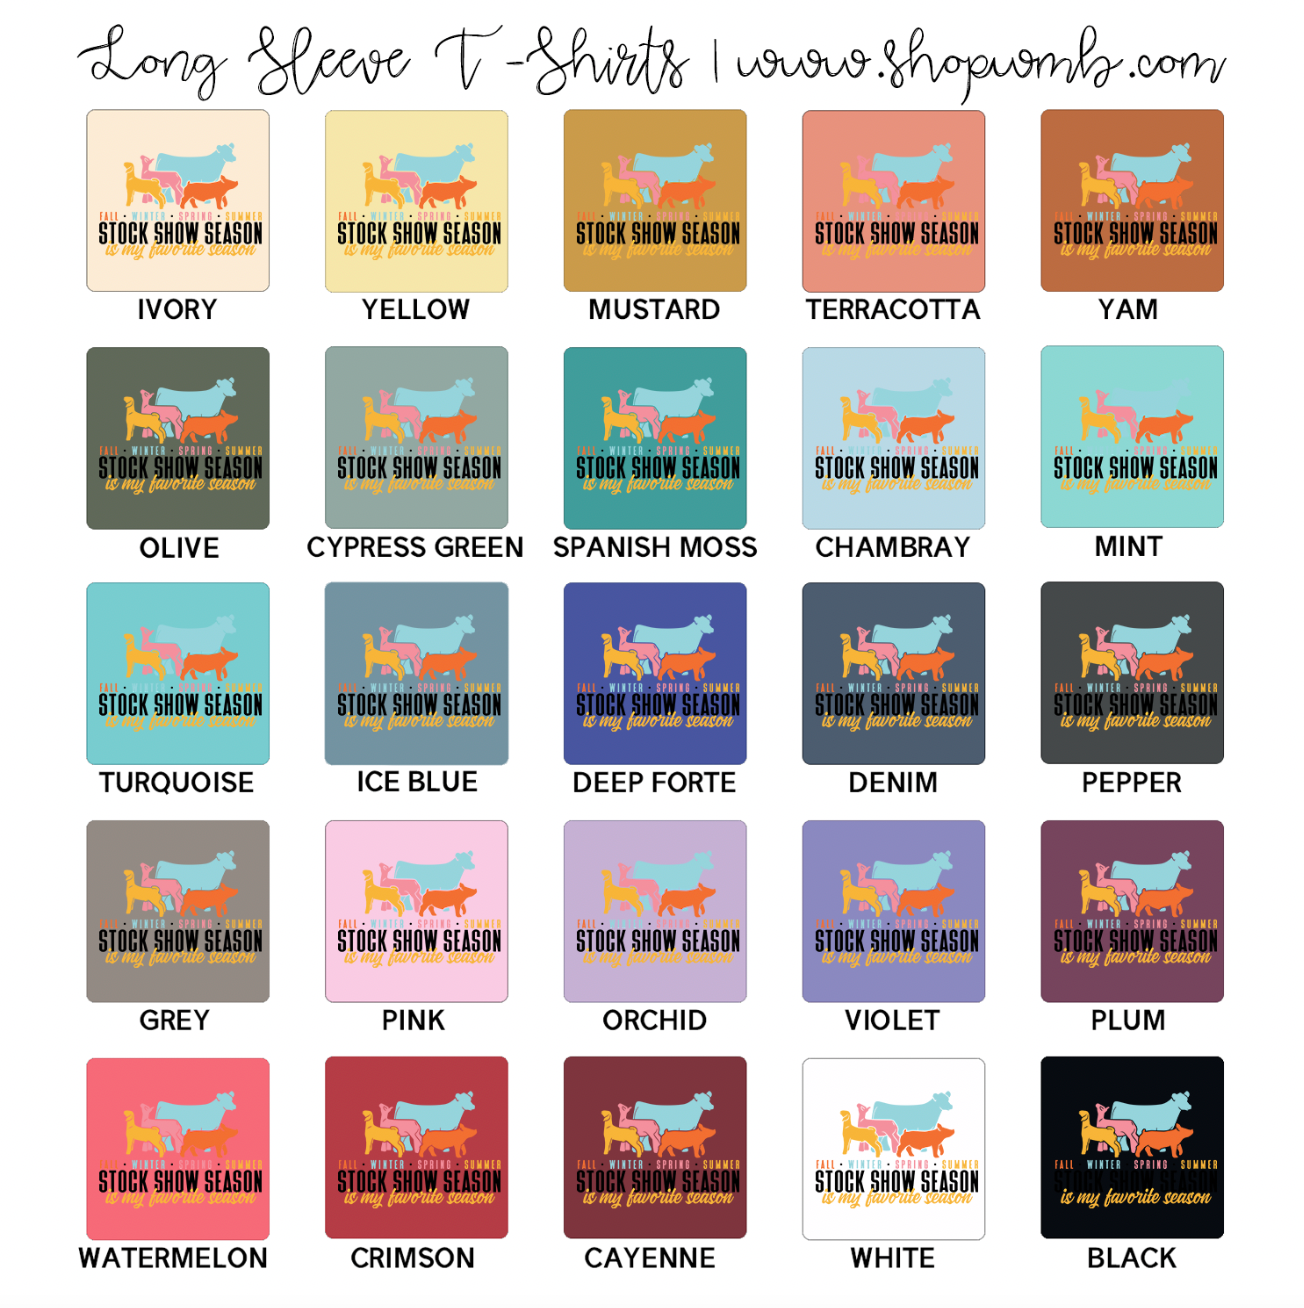 My Favorite Season Is Stock Show Season LONG SLEEVE T-Shirt (S-3XL) - Multiple Colors!